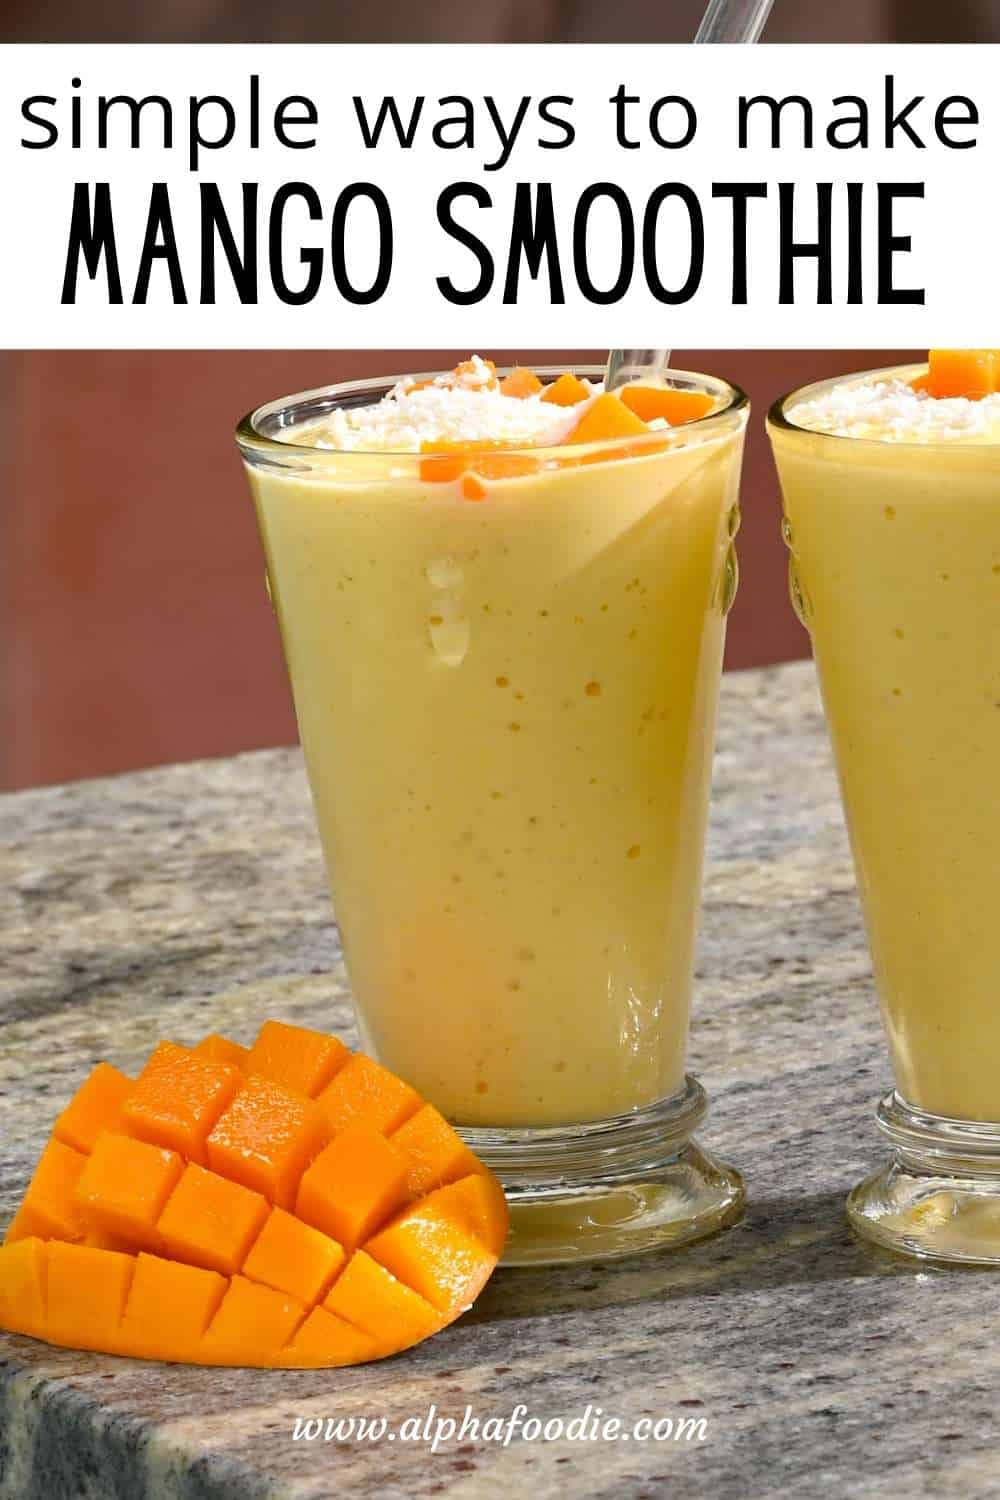 Healthy Breakfast The Best Mango Smoothie - Alphafoodie